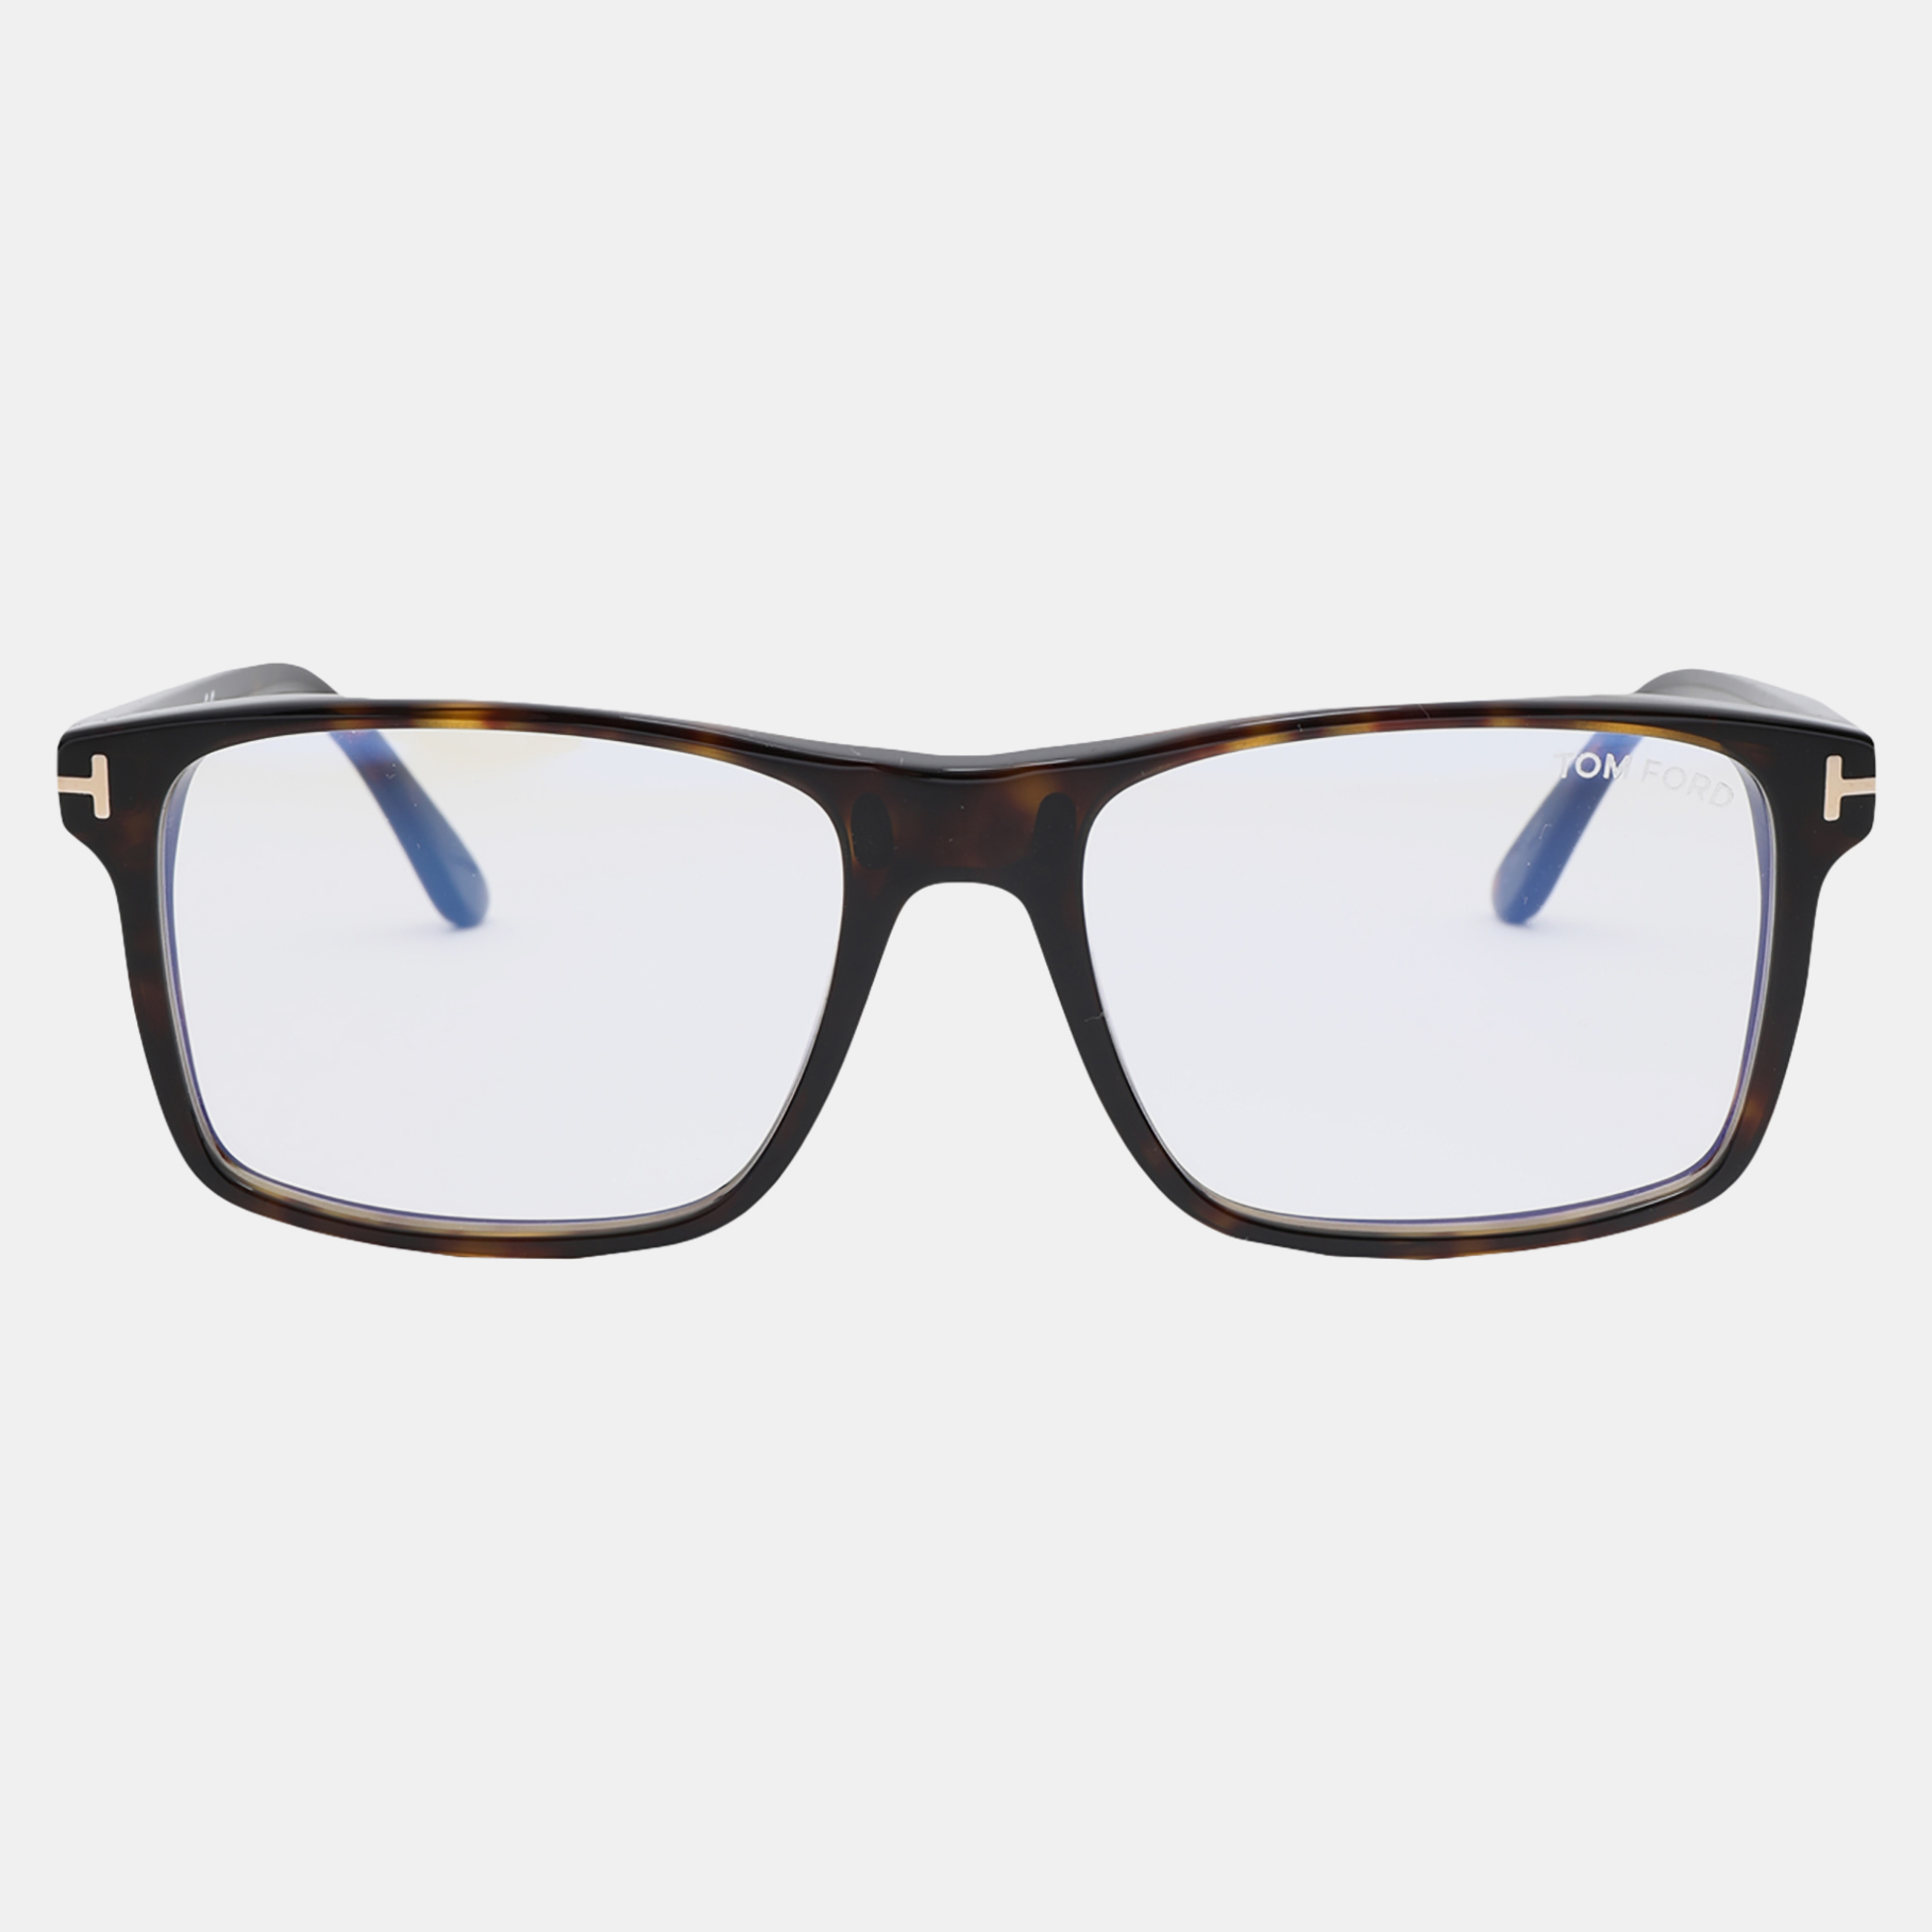 Tom ford plastic eyeglass frames 54